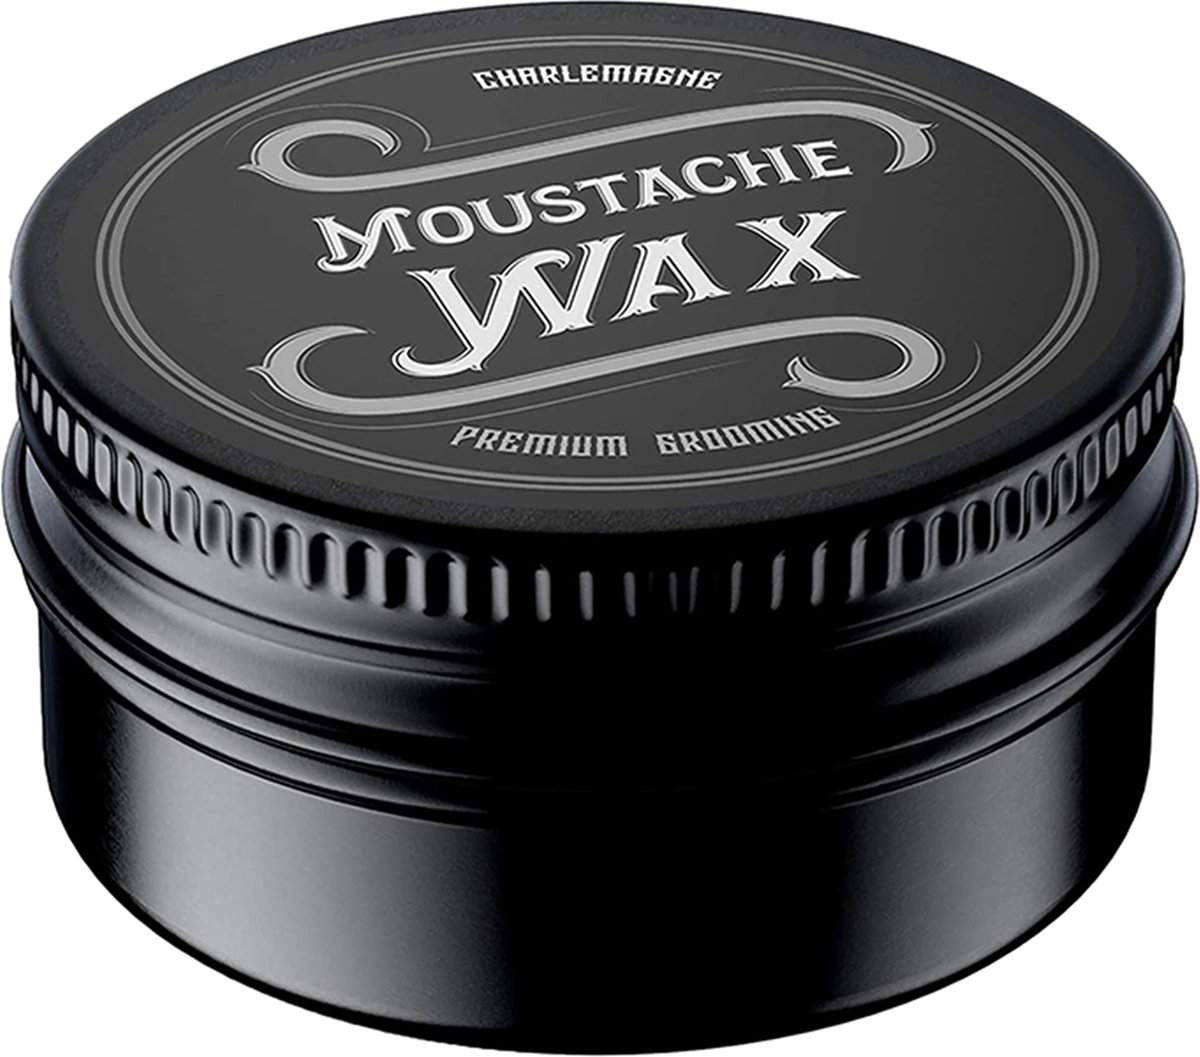 Charlemagne Premium Moustache Wax